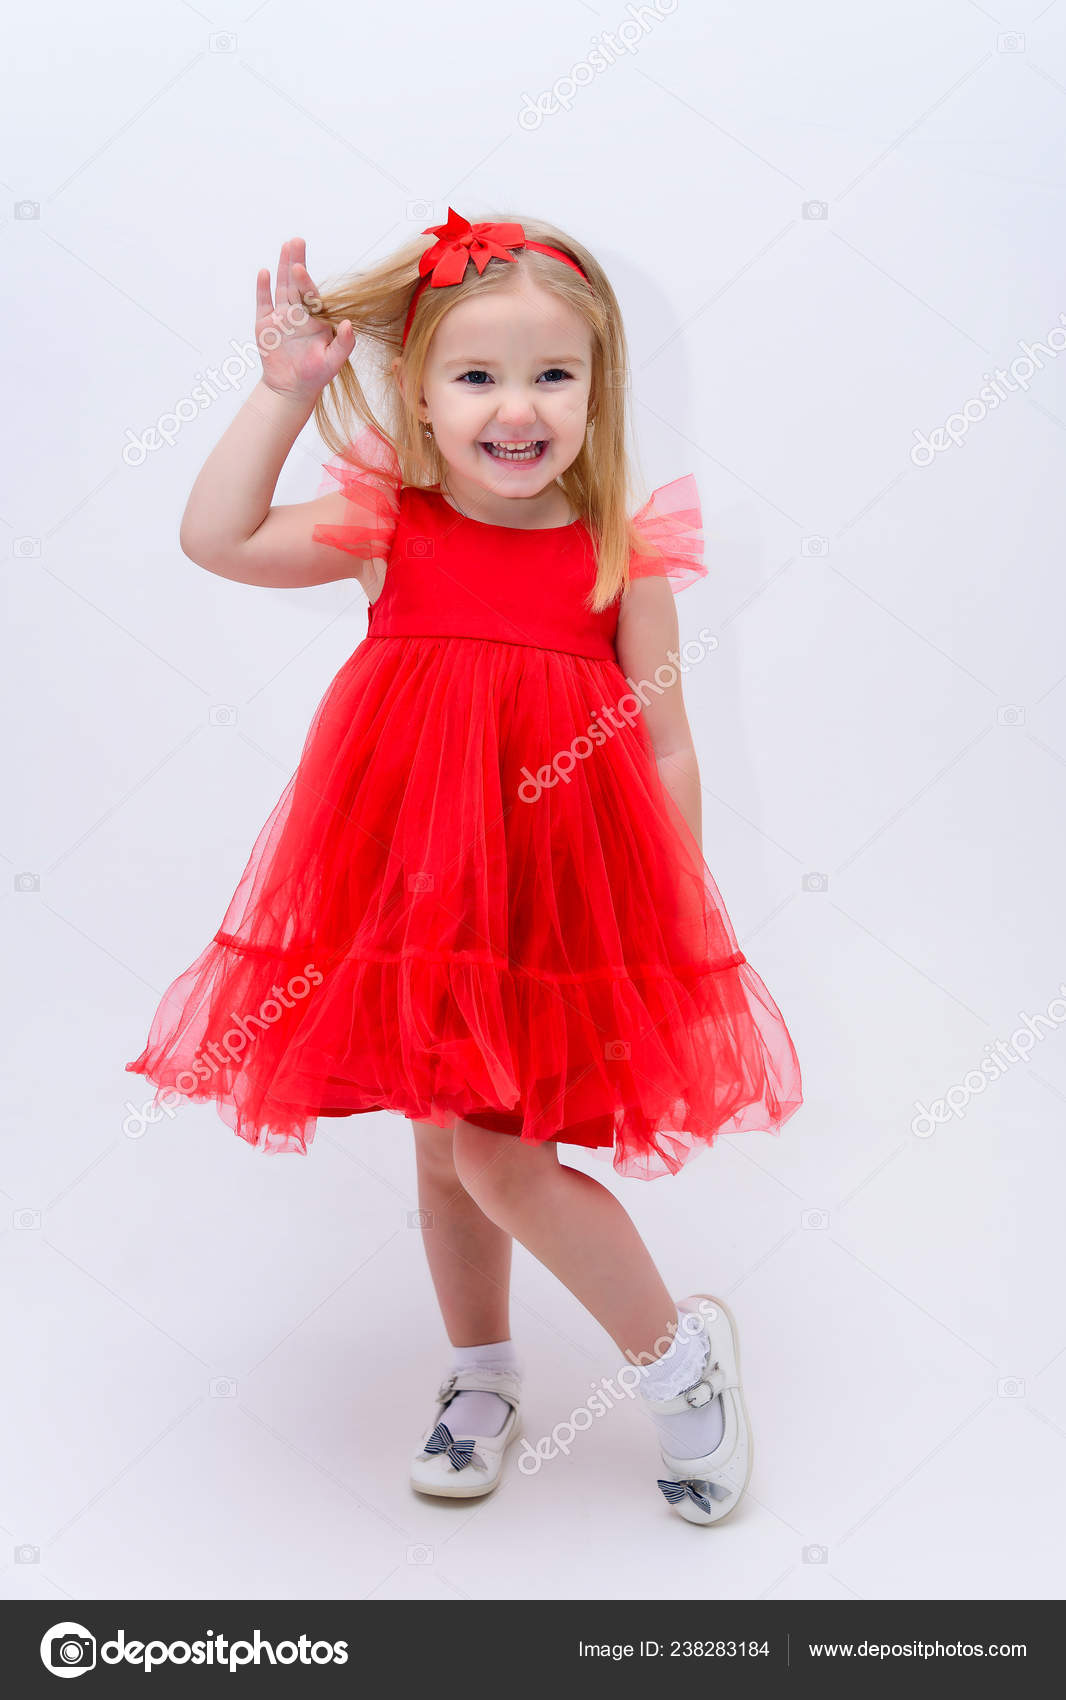 Pinterest | Child photography girl, Kids fashion photography, Baby girl  photography